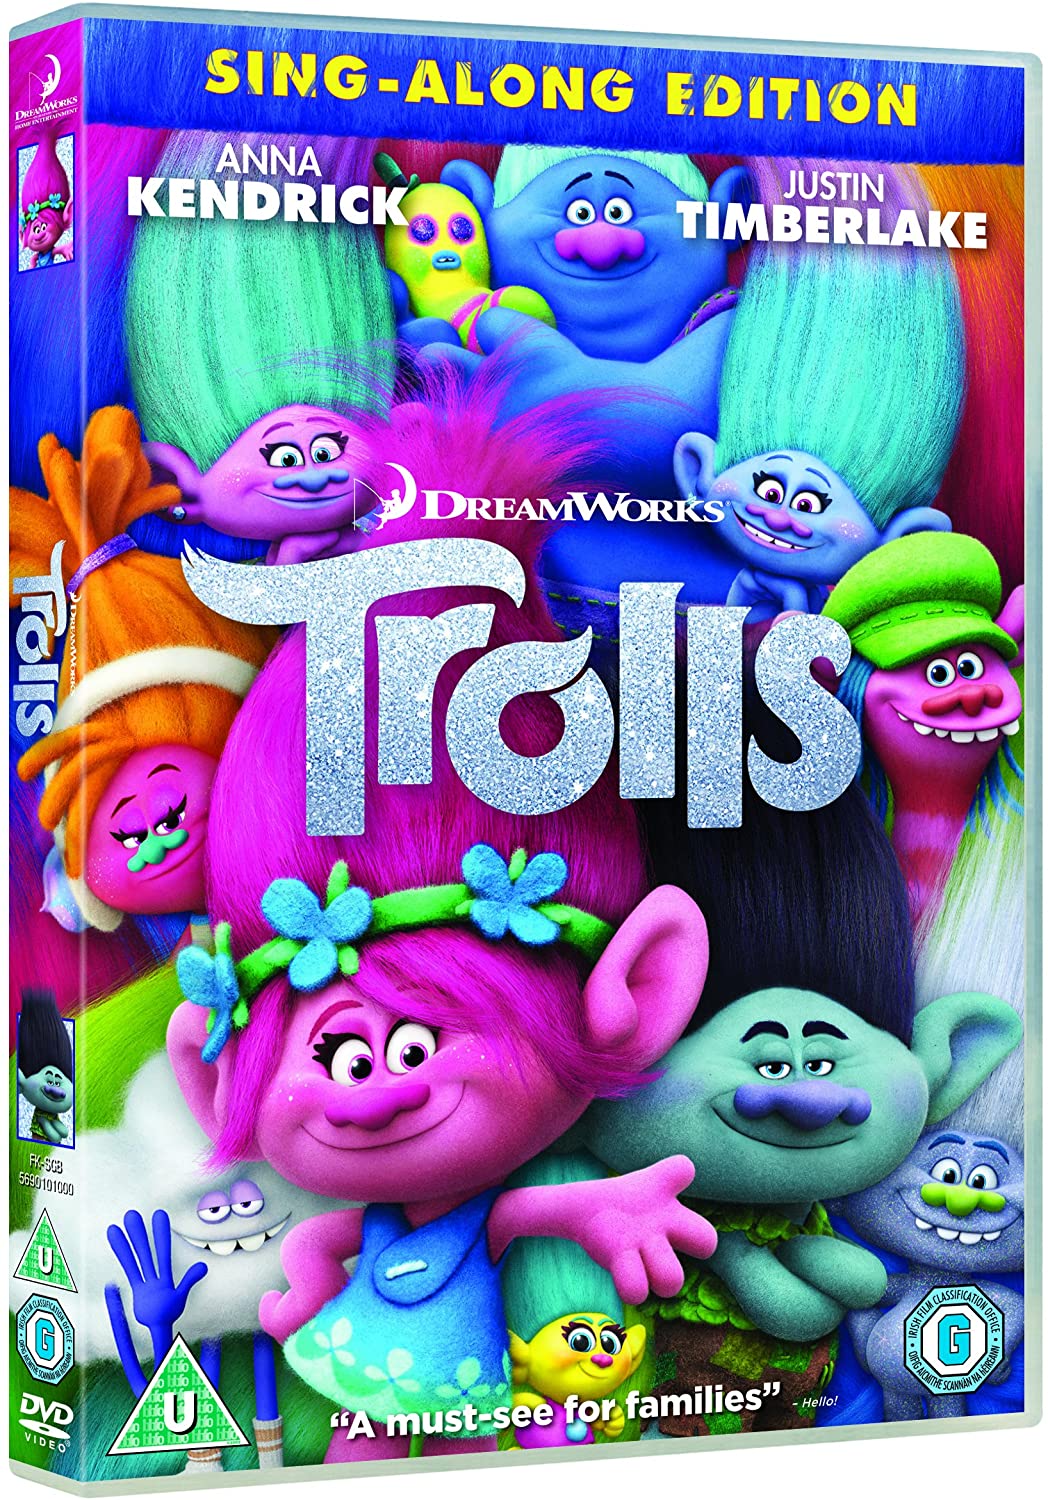 Trolls [DVD]